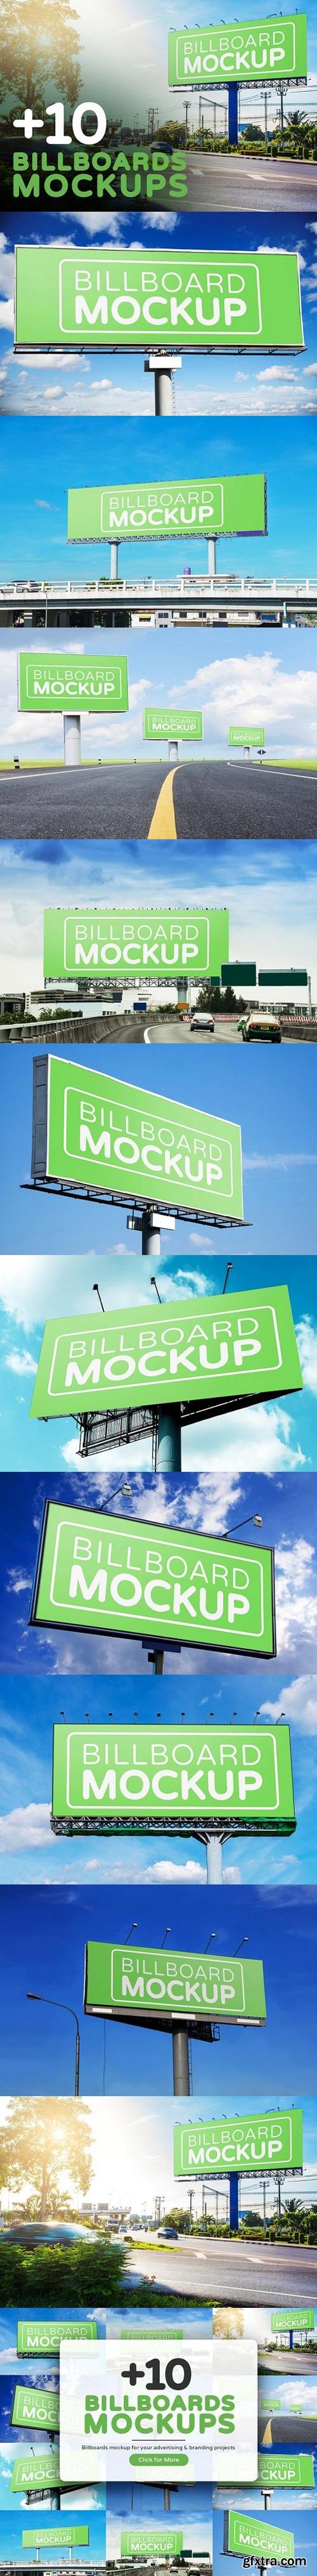 CM - Billboards Mock-ups Vol.4 1434457